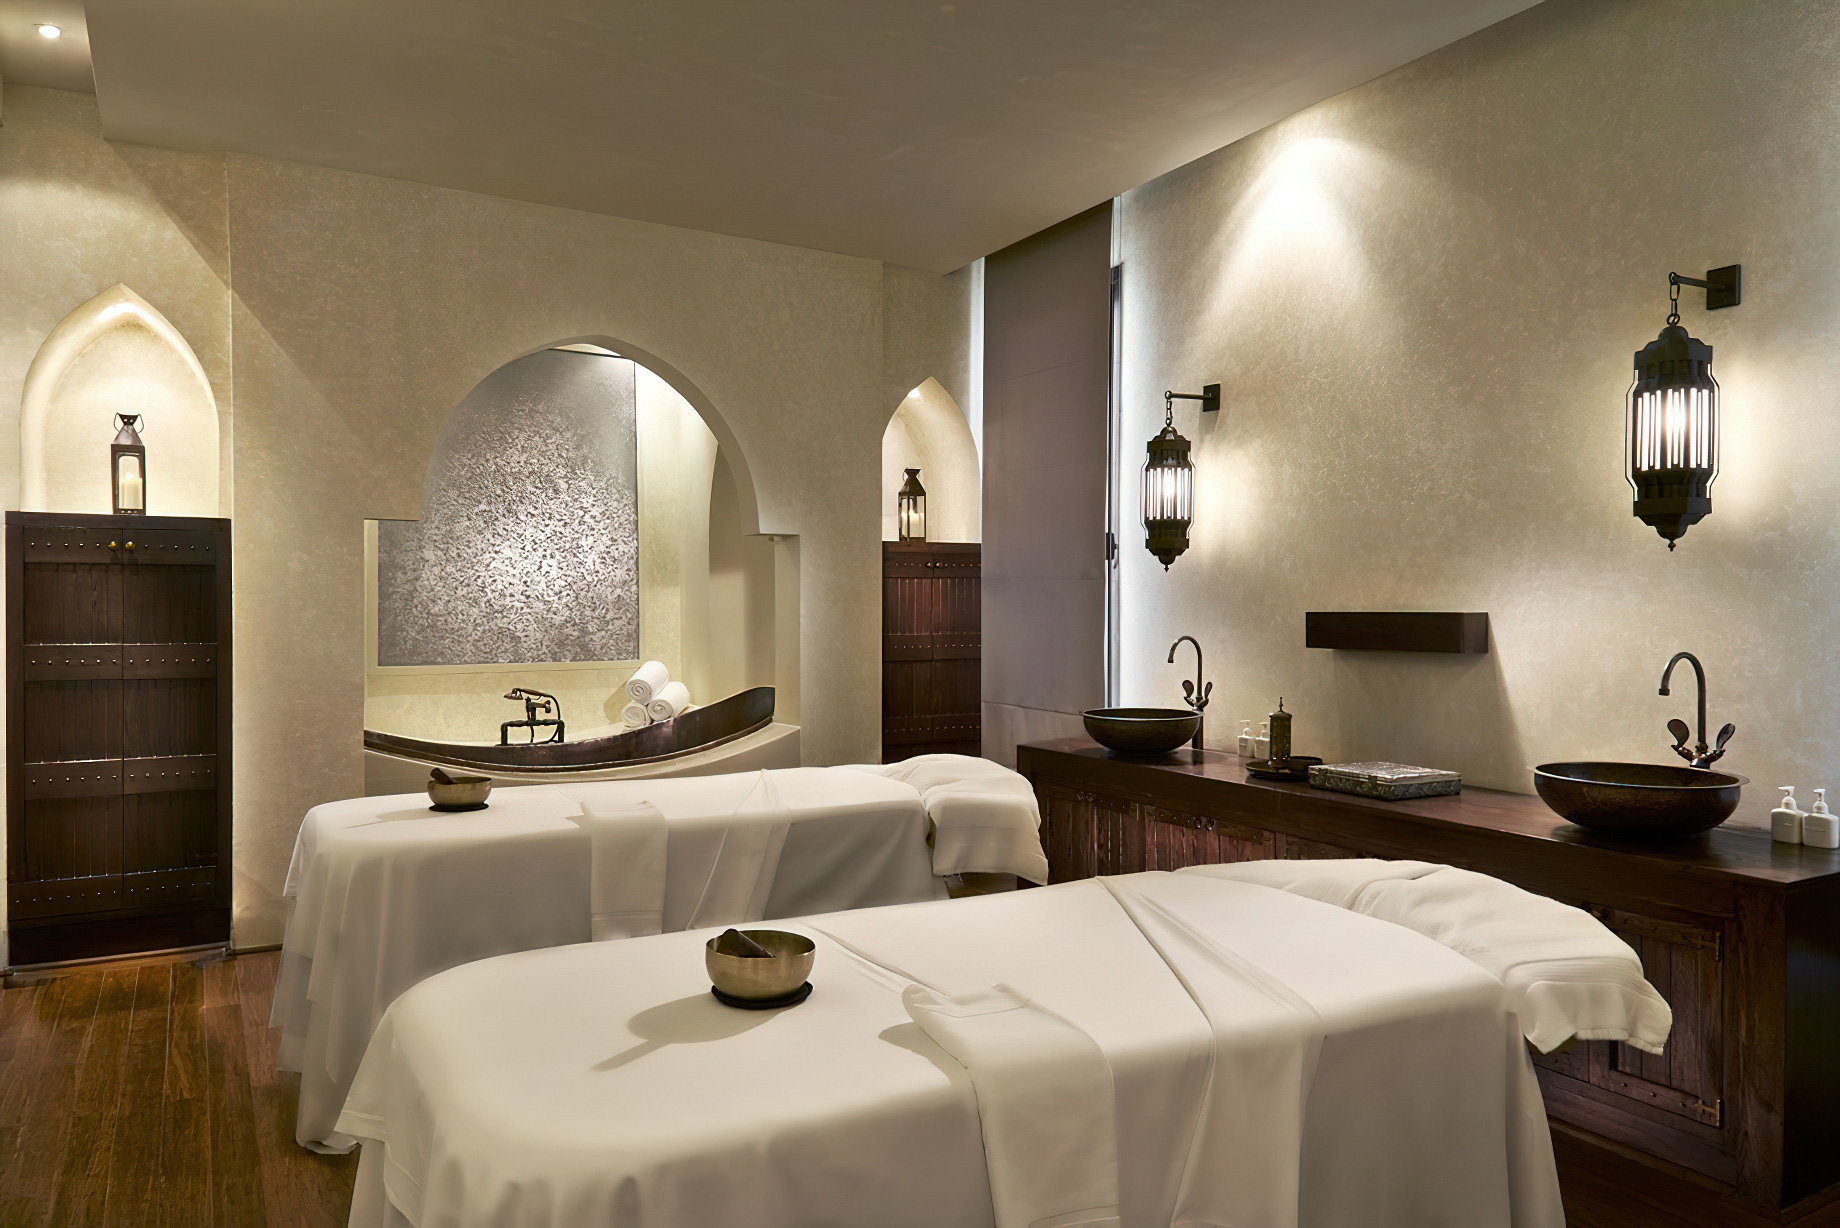 Al Bustan Palace, A Ritz-Carlton Hotel – Muscat, Oman – Spa Treatment Room